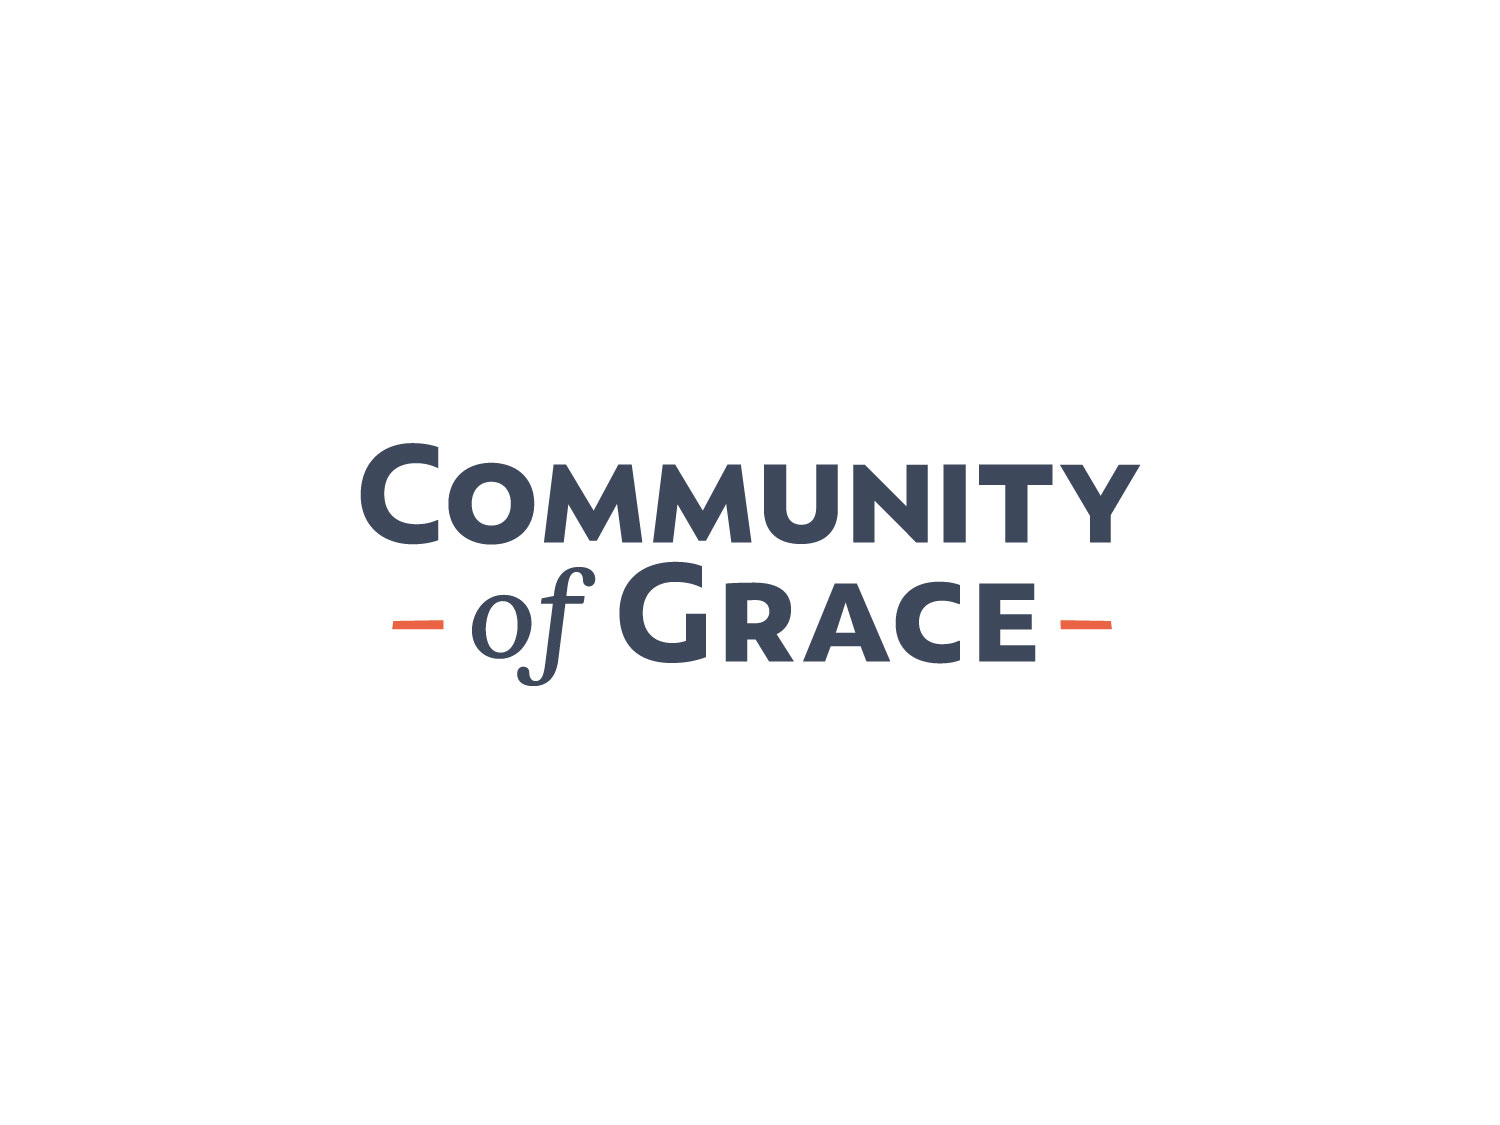 Community of Grace wordmark